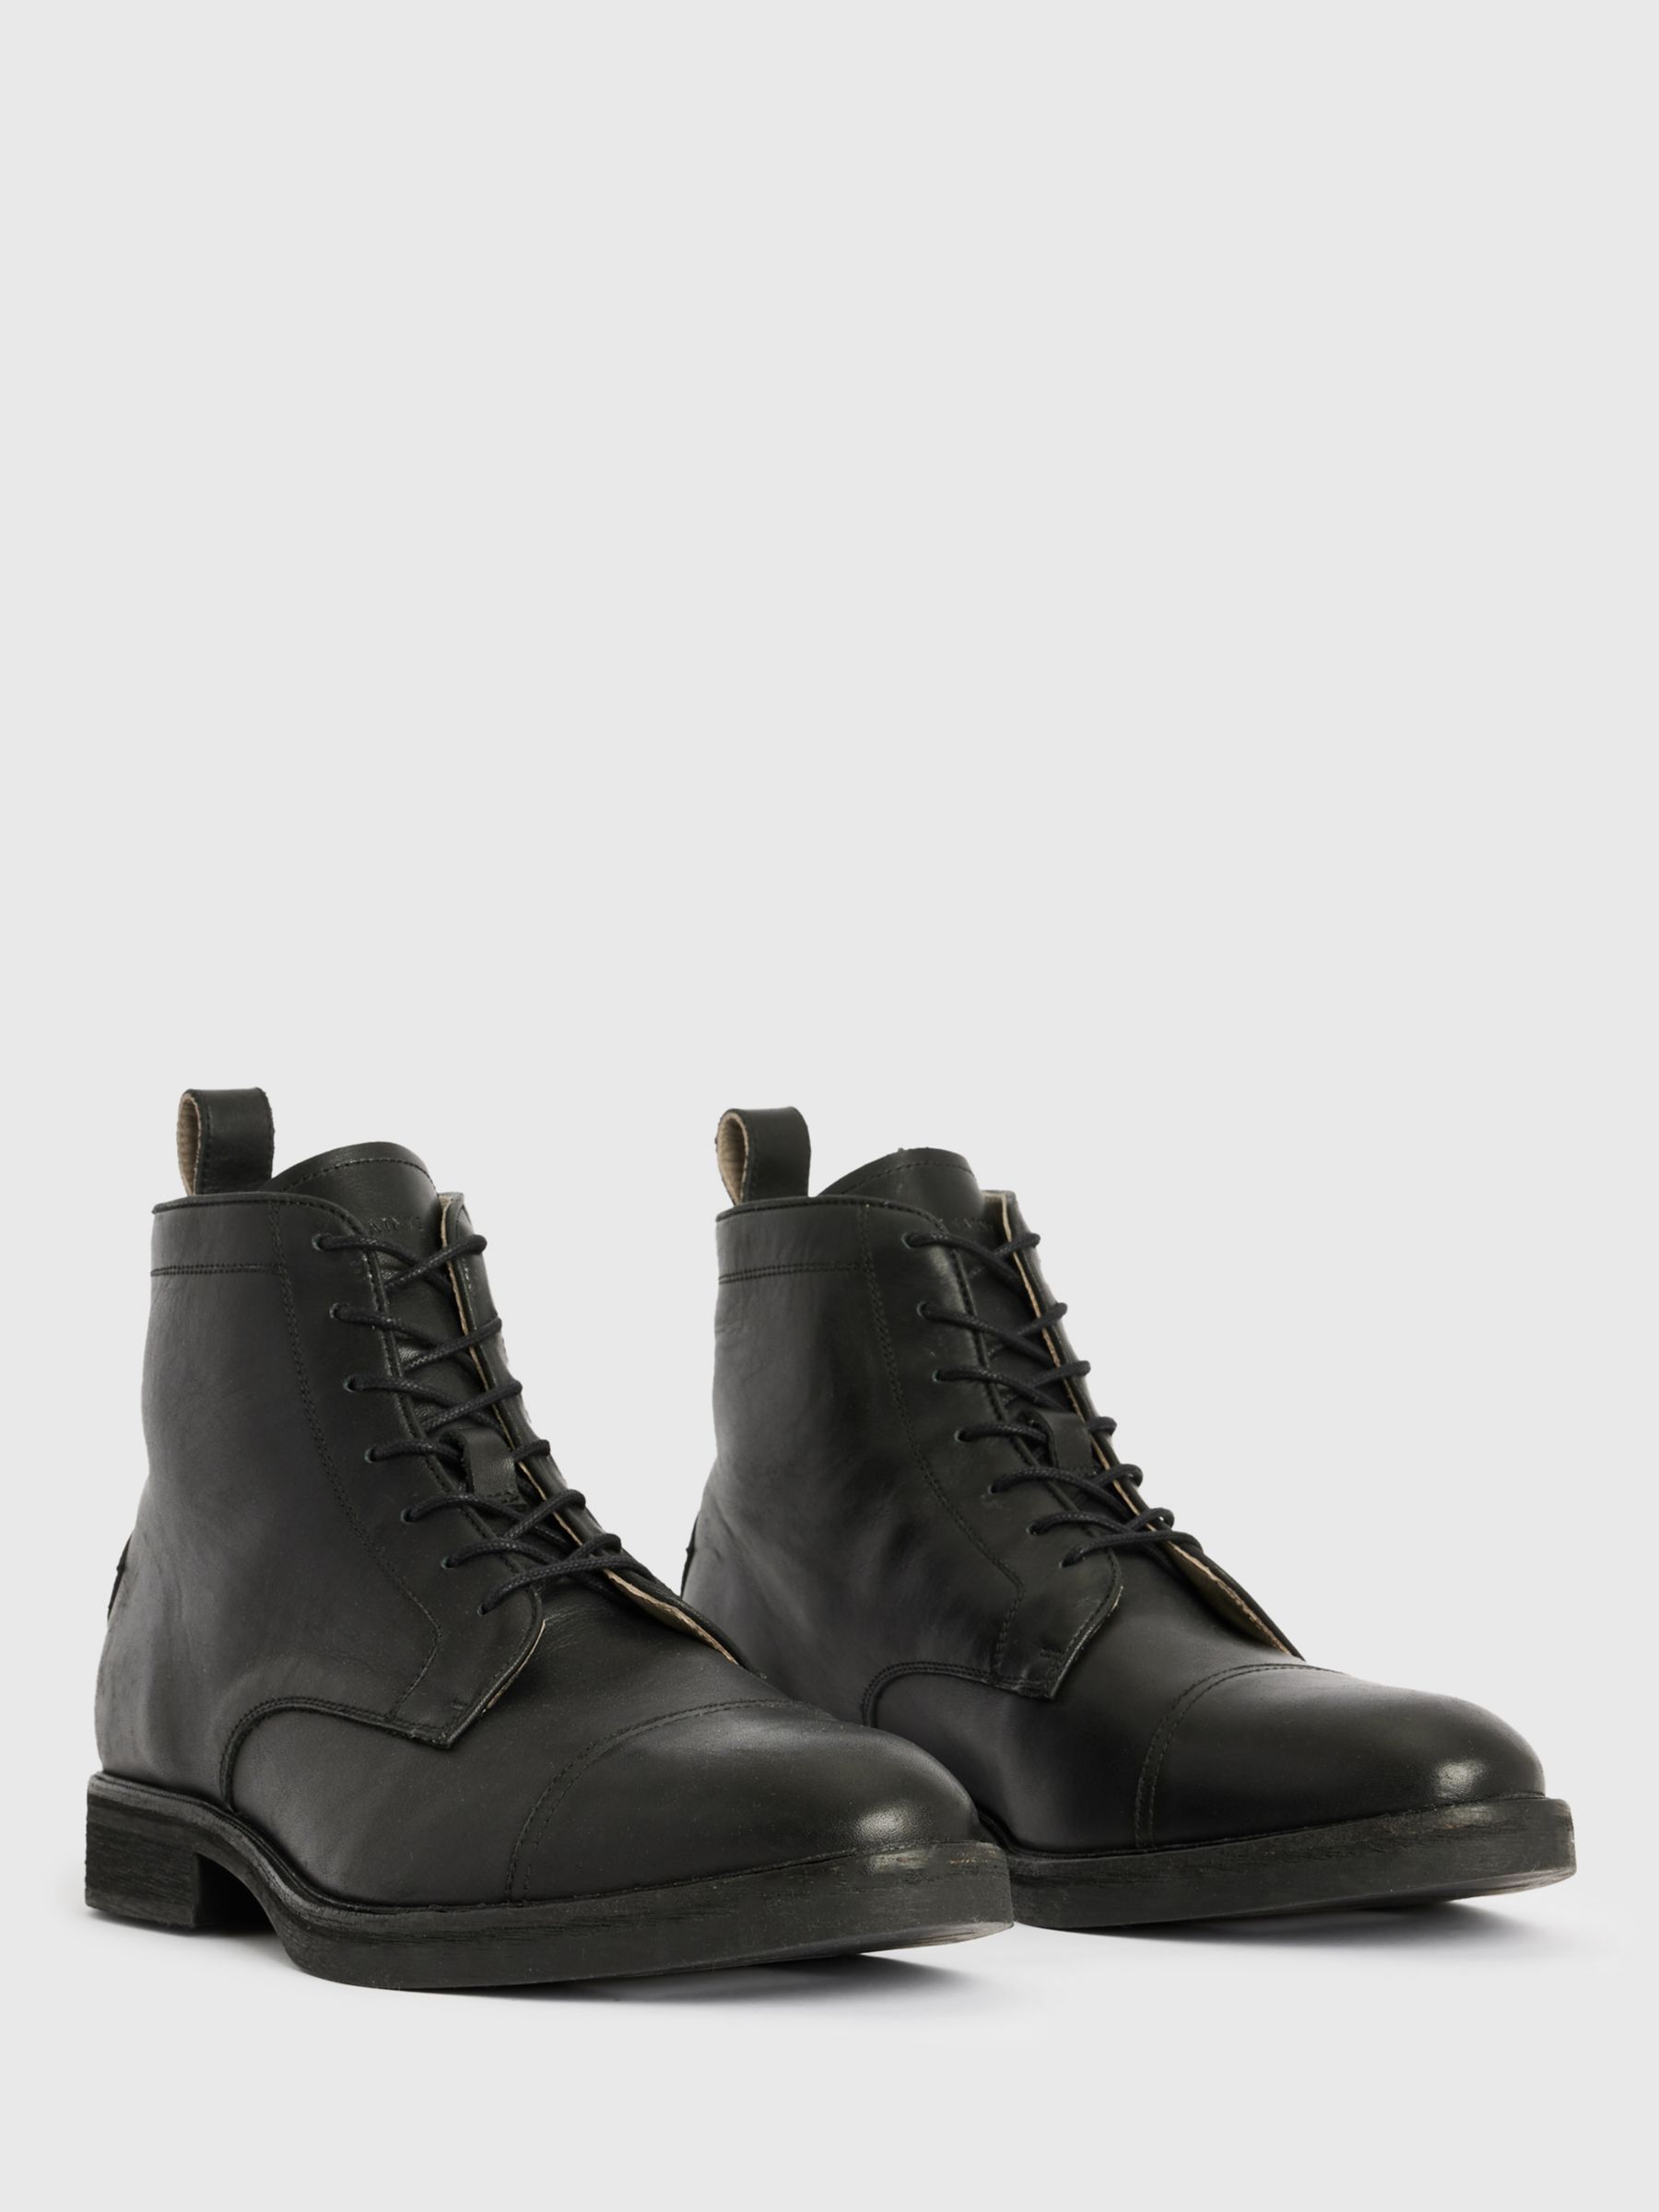 AllSaints Drago Leather Lace-Up Boots, Black, 10